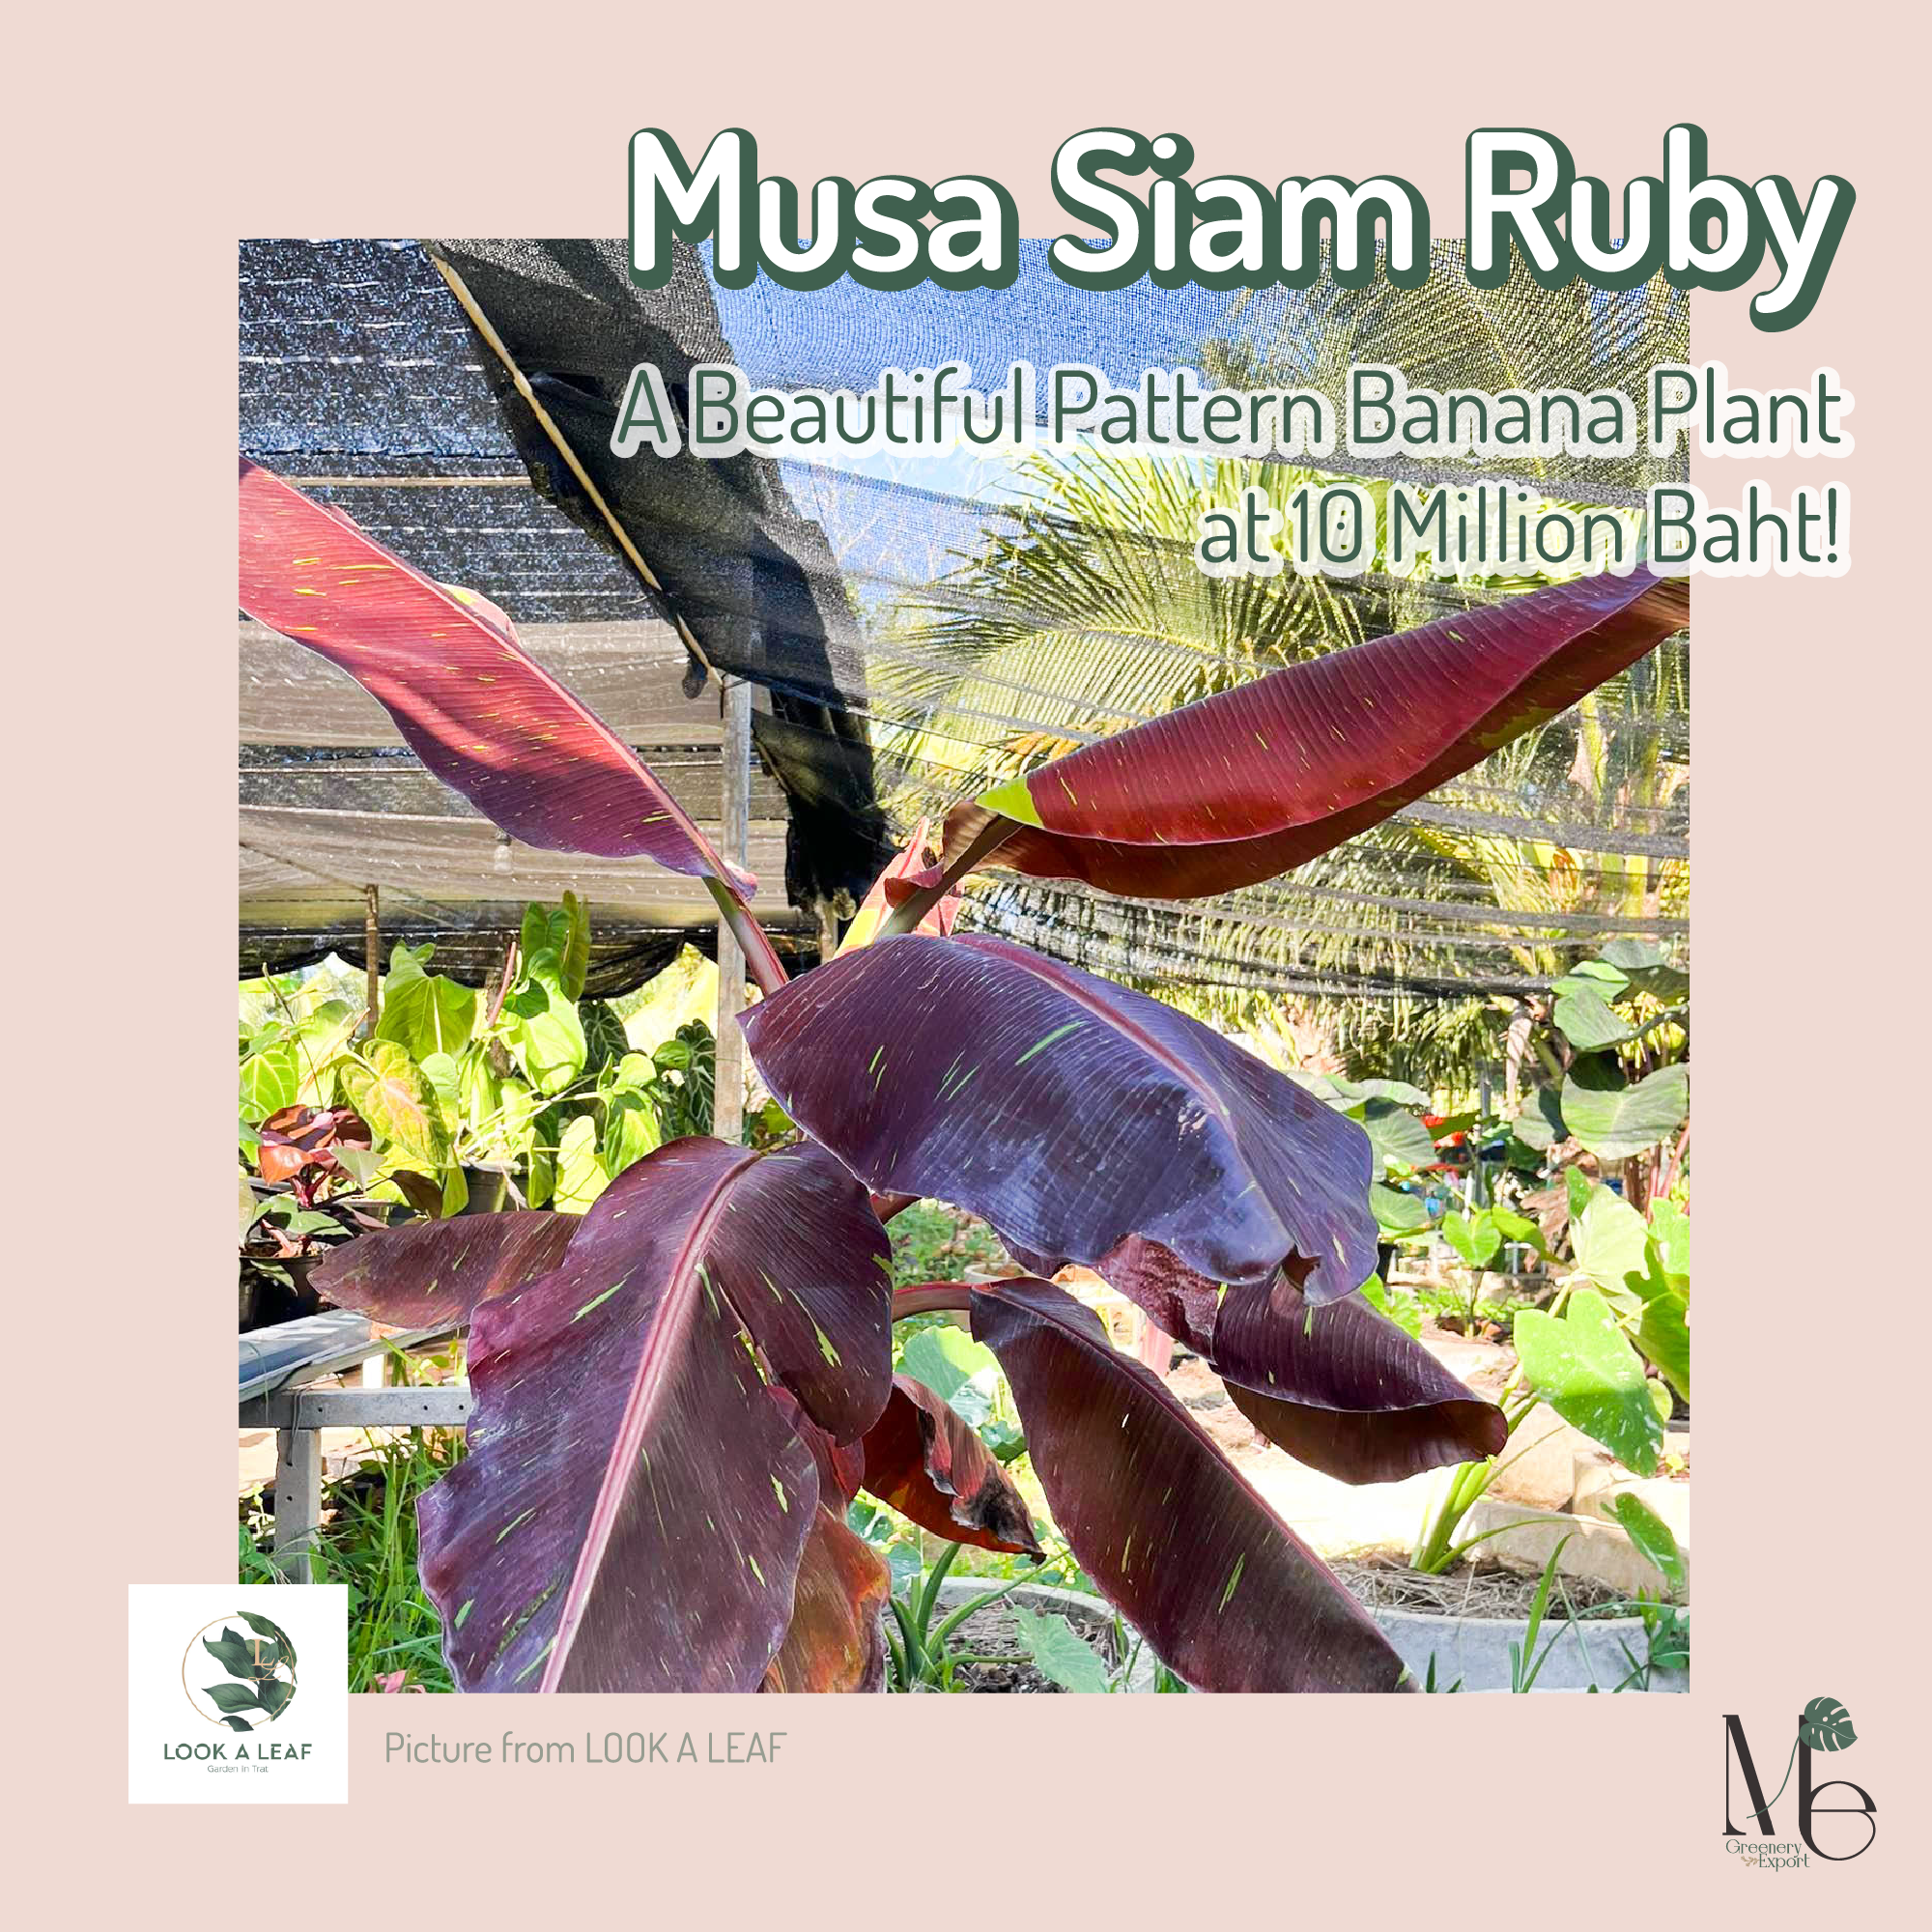 Musa Siam Ruby